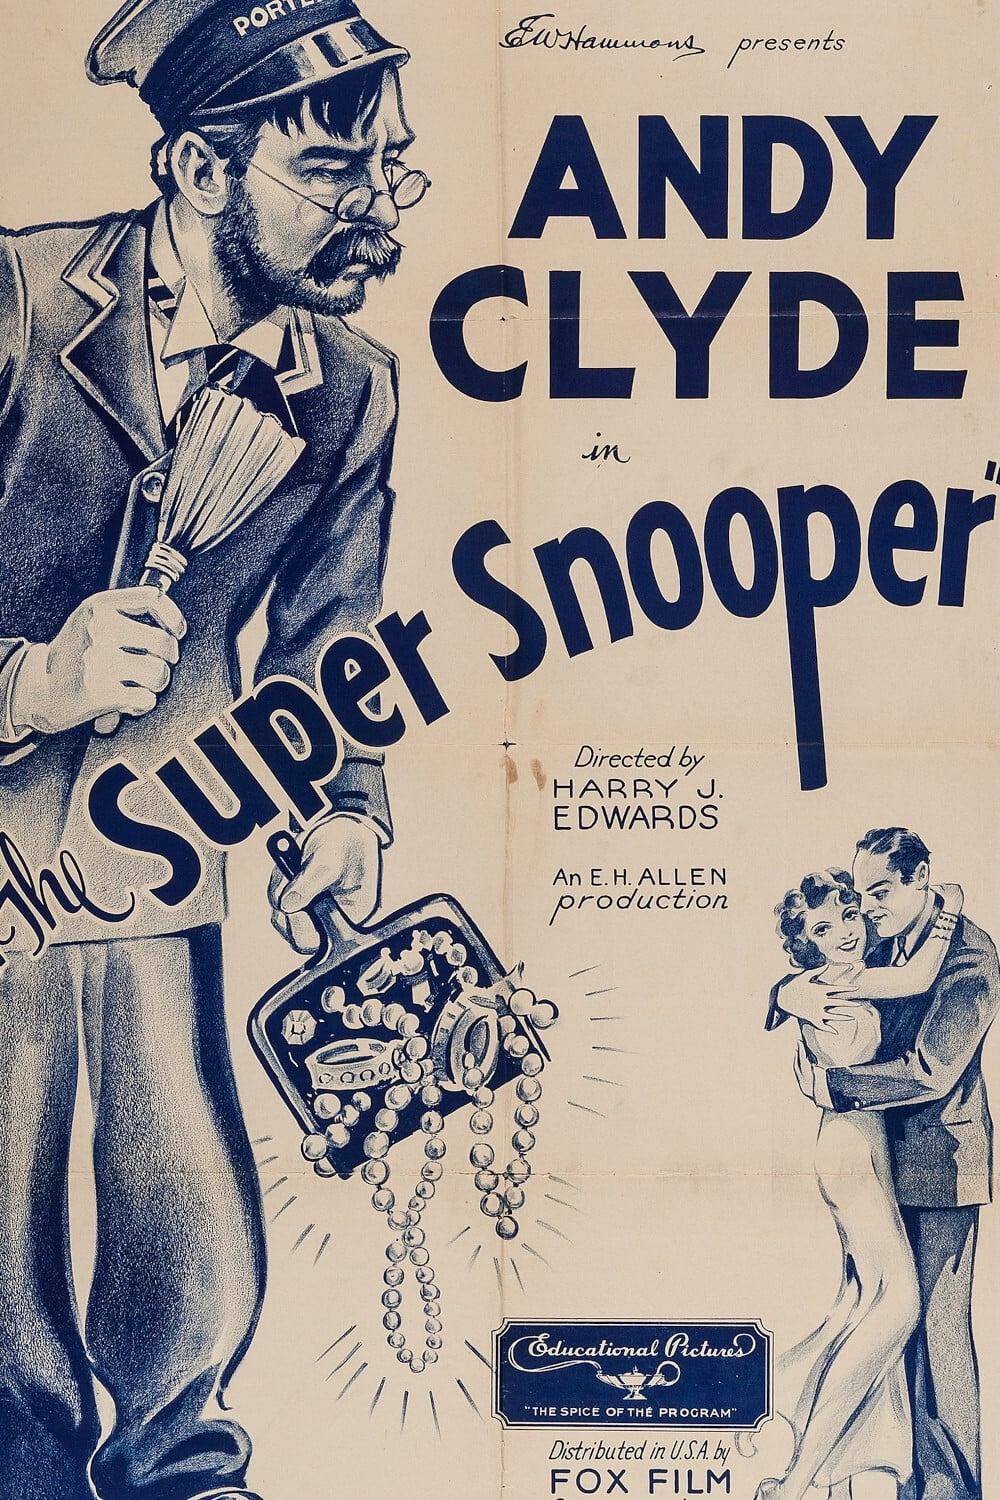 The Super Snooper poster